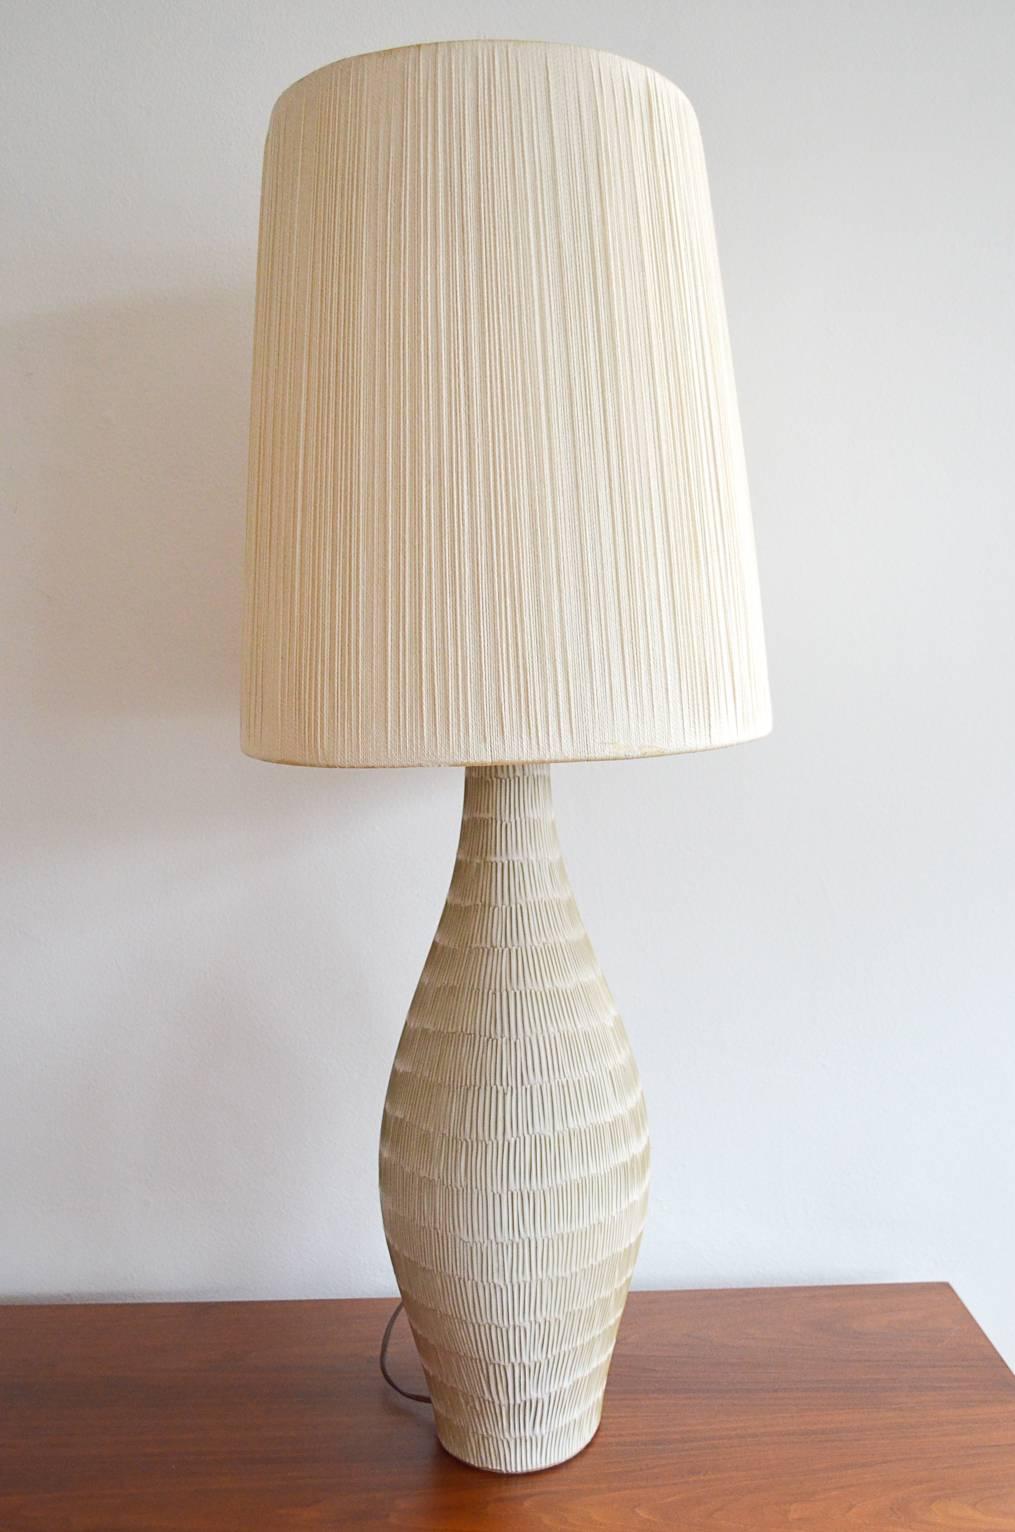 Mid-Century Modern Pair of Incised Cream Ceramic Lamps with Original String Shades